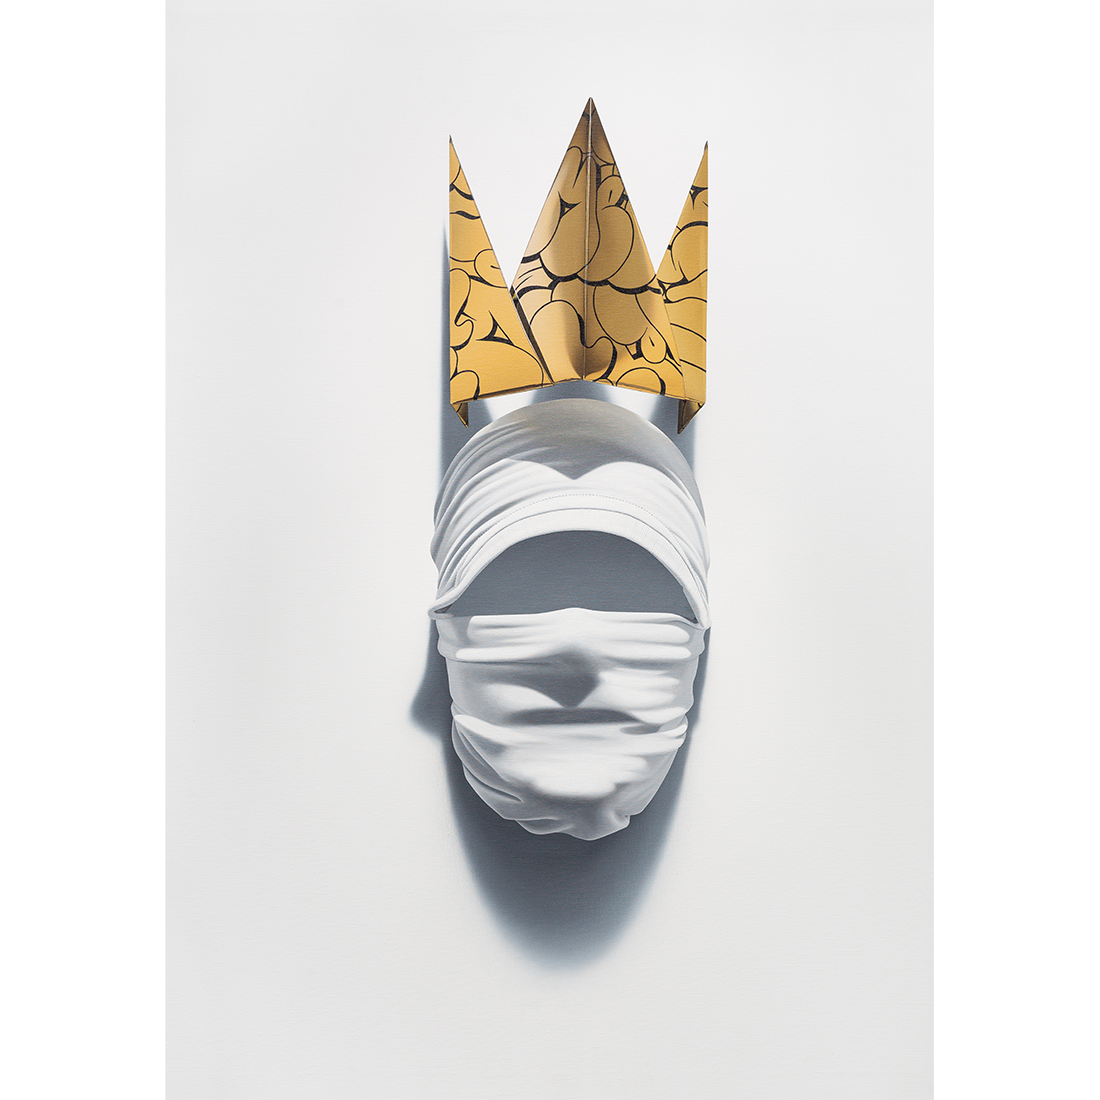 Shirt Mask x Golden Paper Crow SOW01